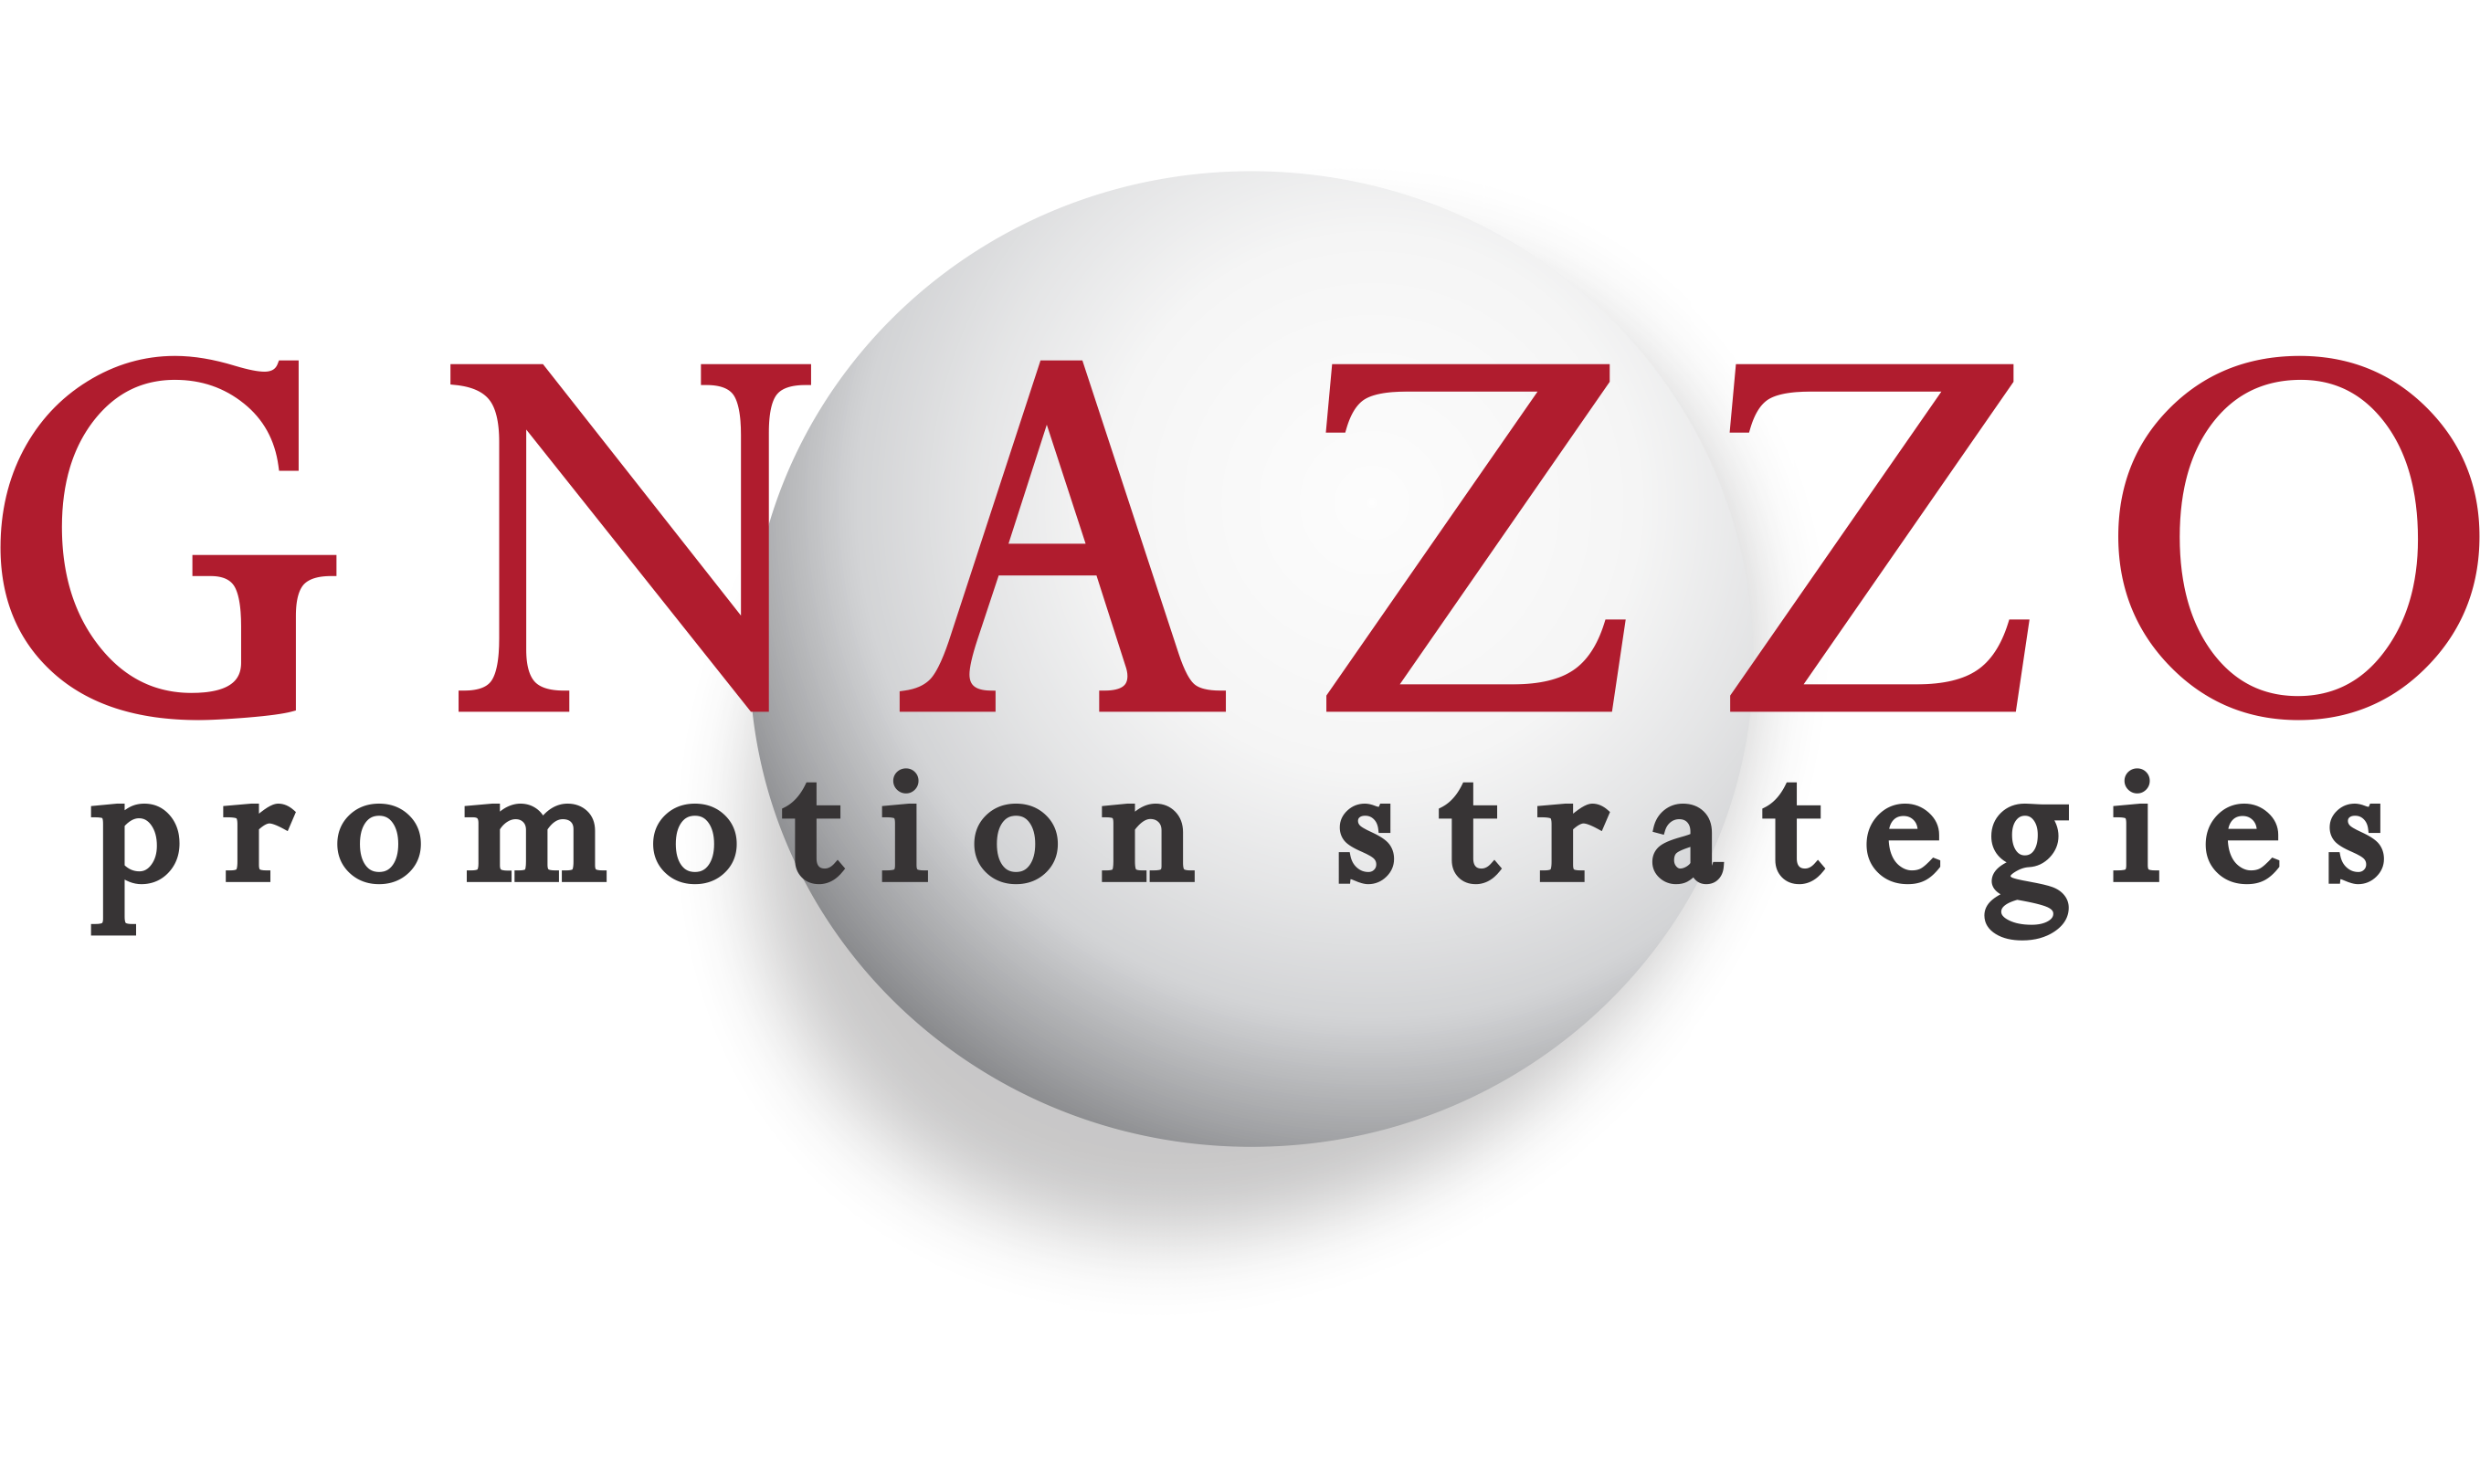 Gnazzo Promotion Strategies